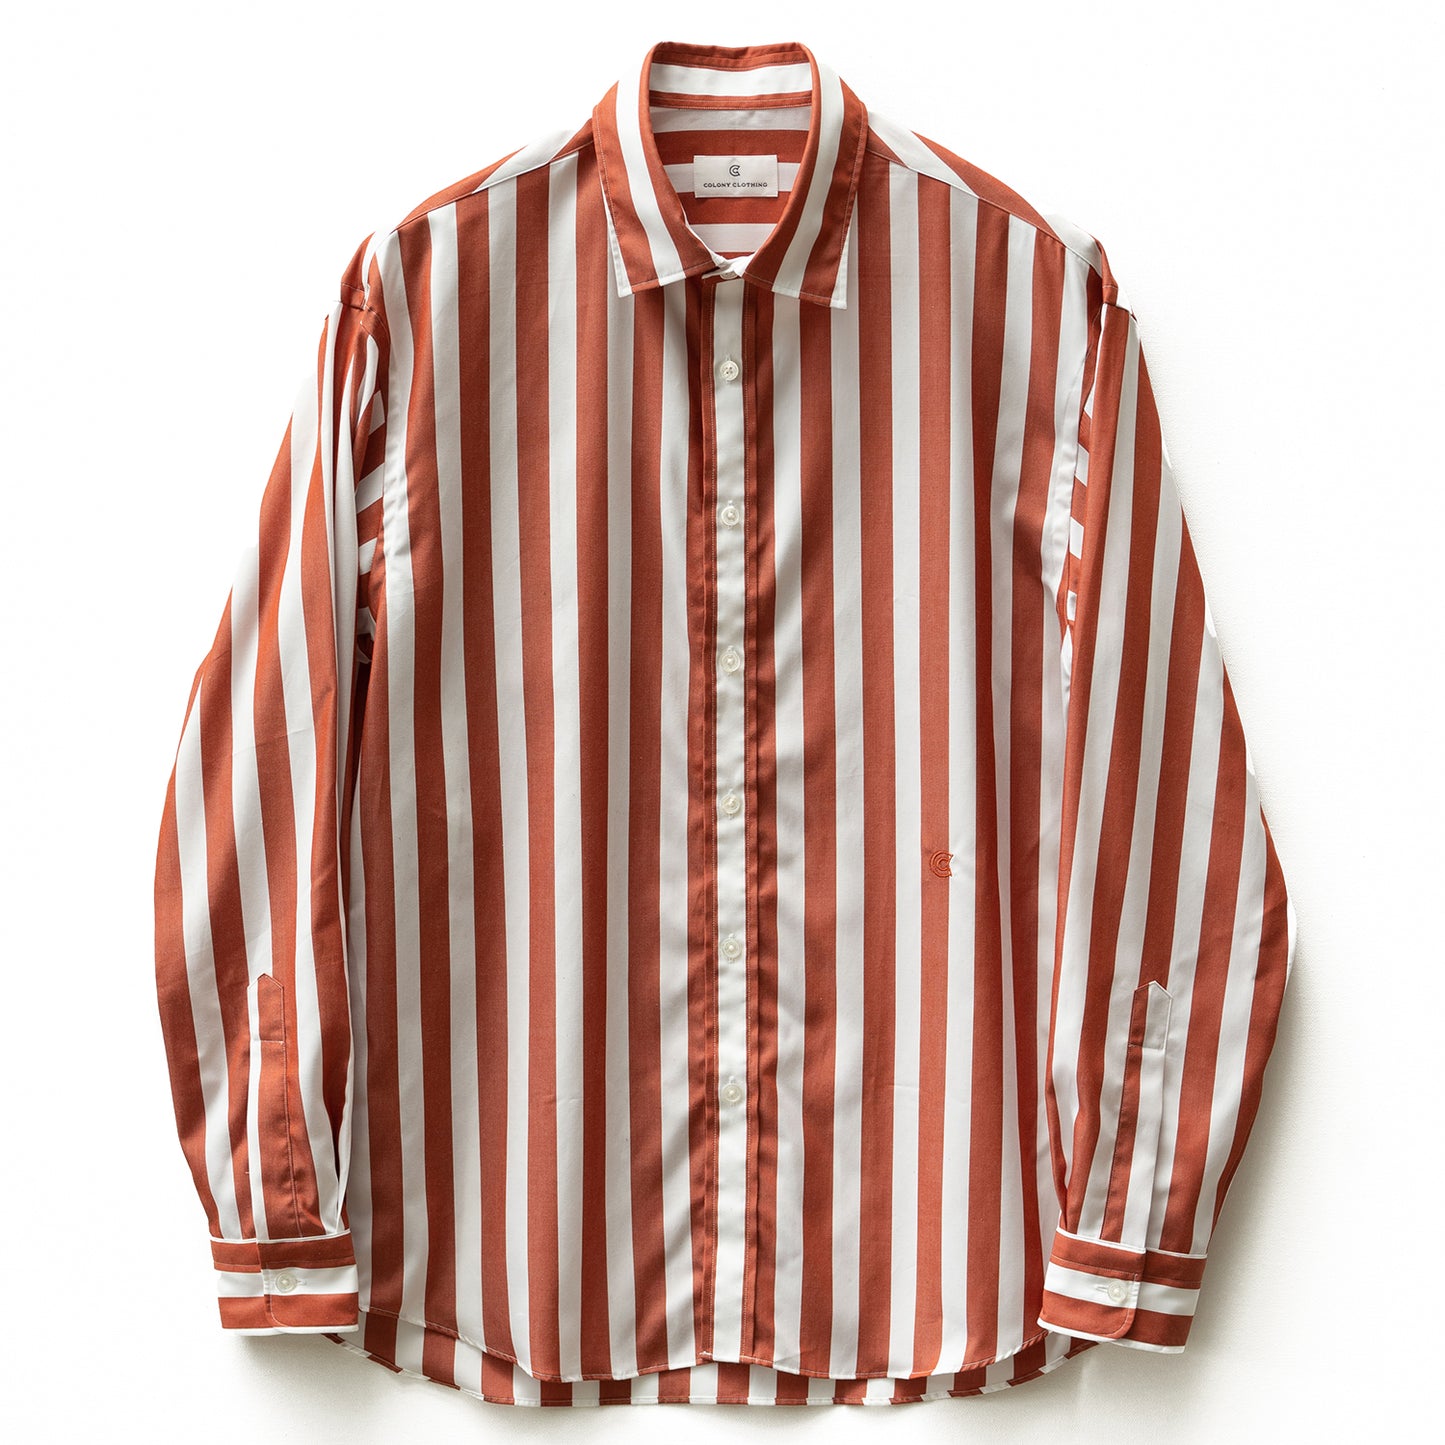 COLONY CLOTHING / ワイドストライプ ラウンジシャツ / CC2301-SH03-01